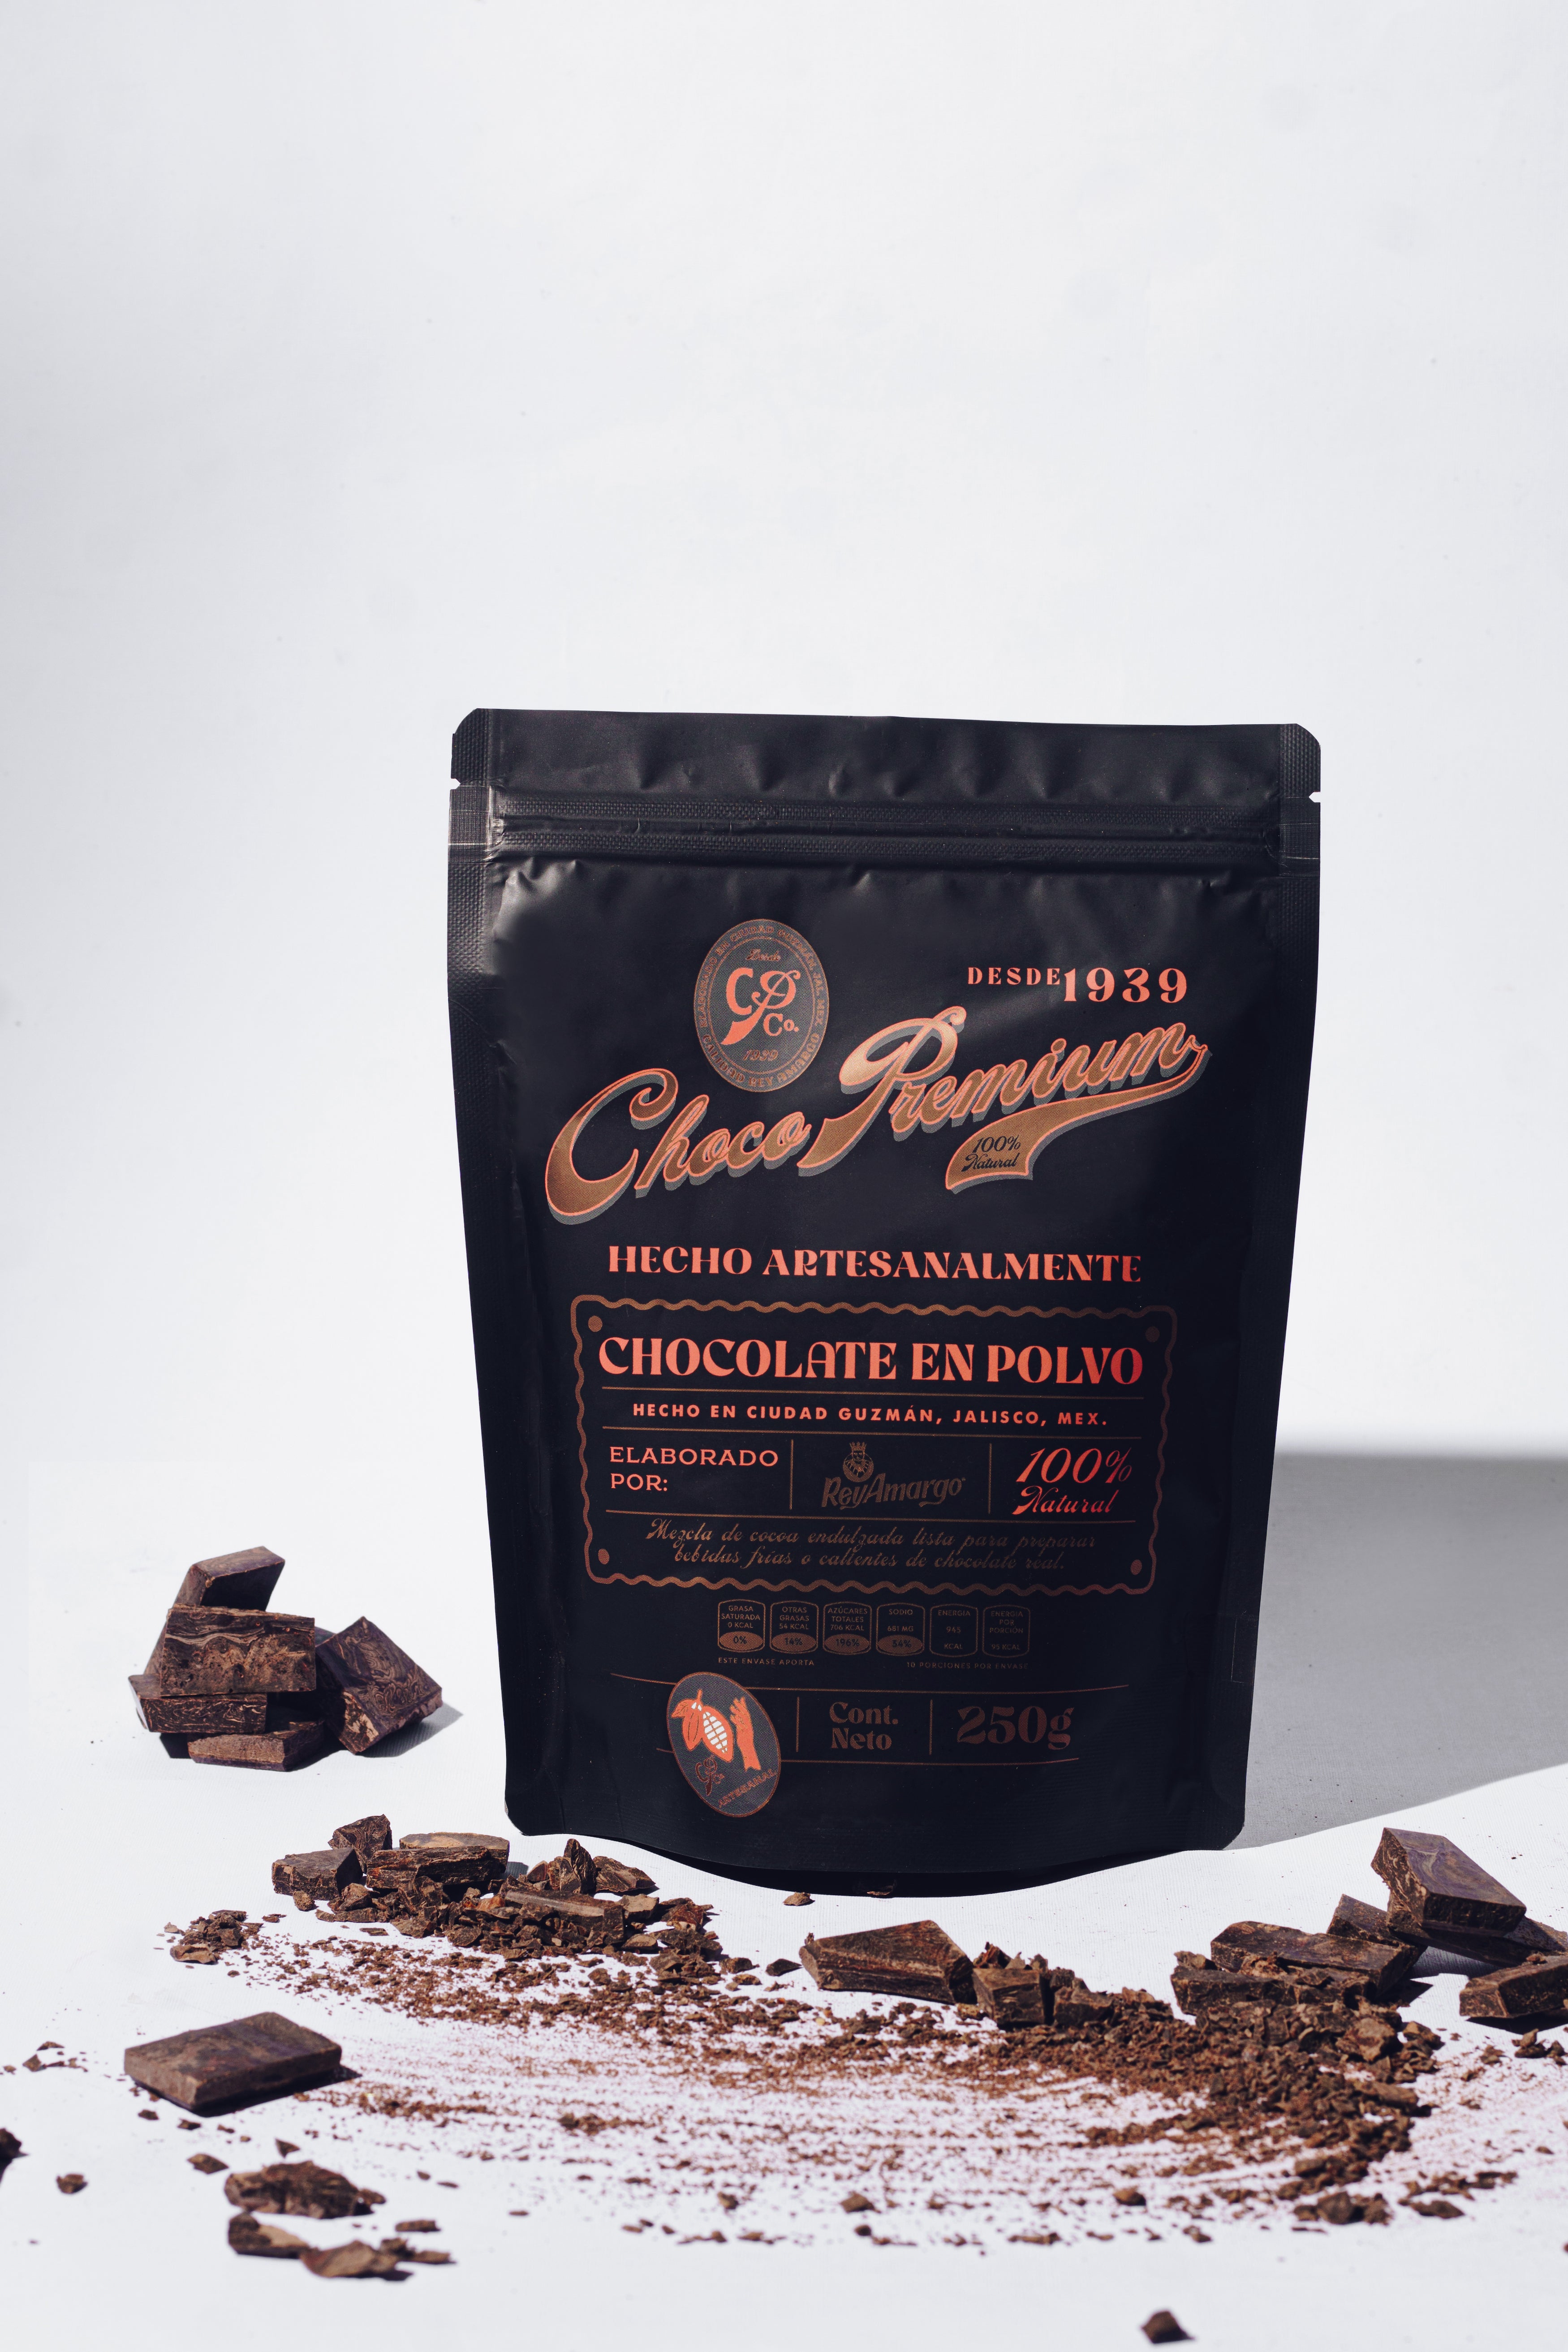 Choco Premium Rey Amargo